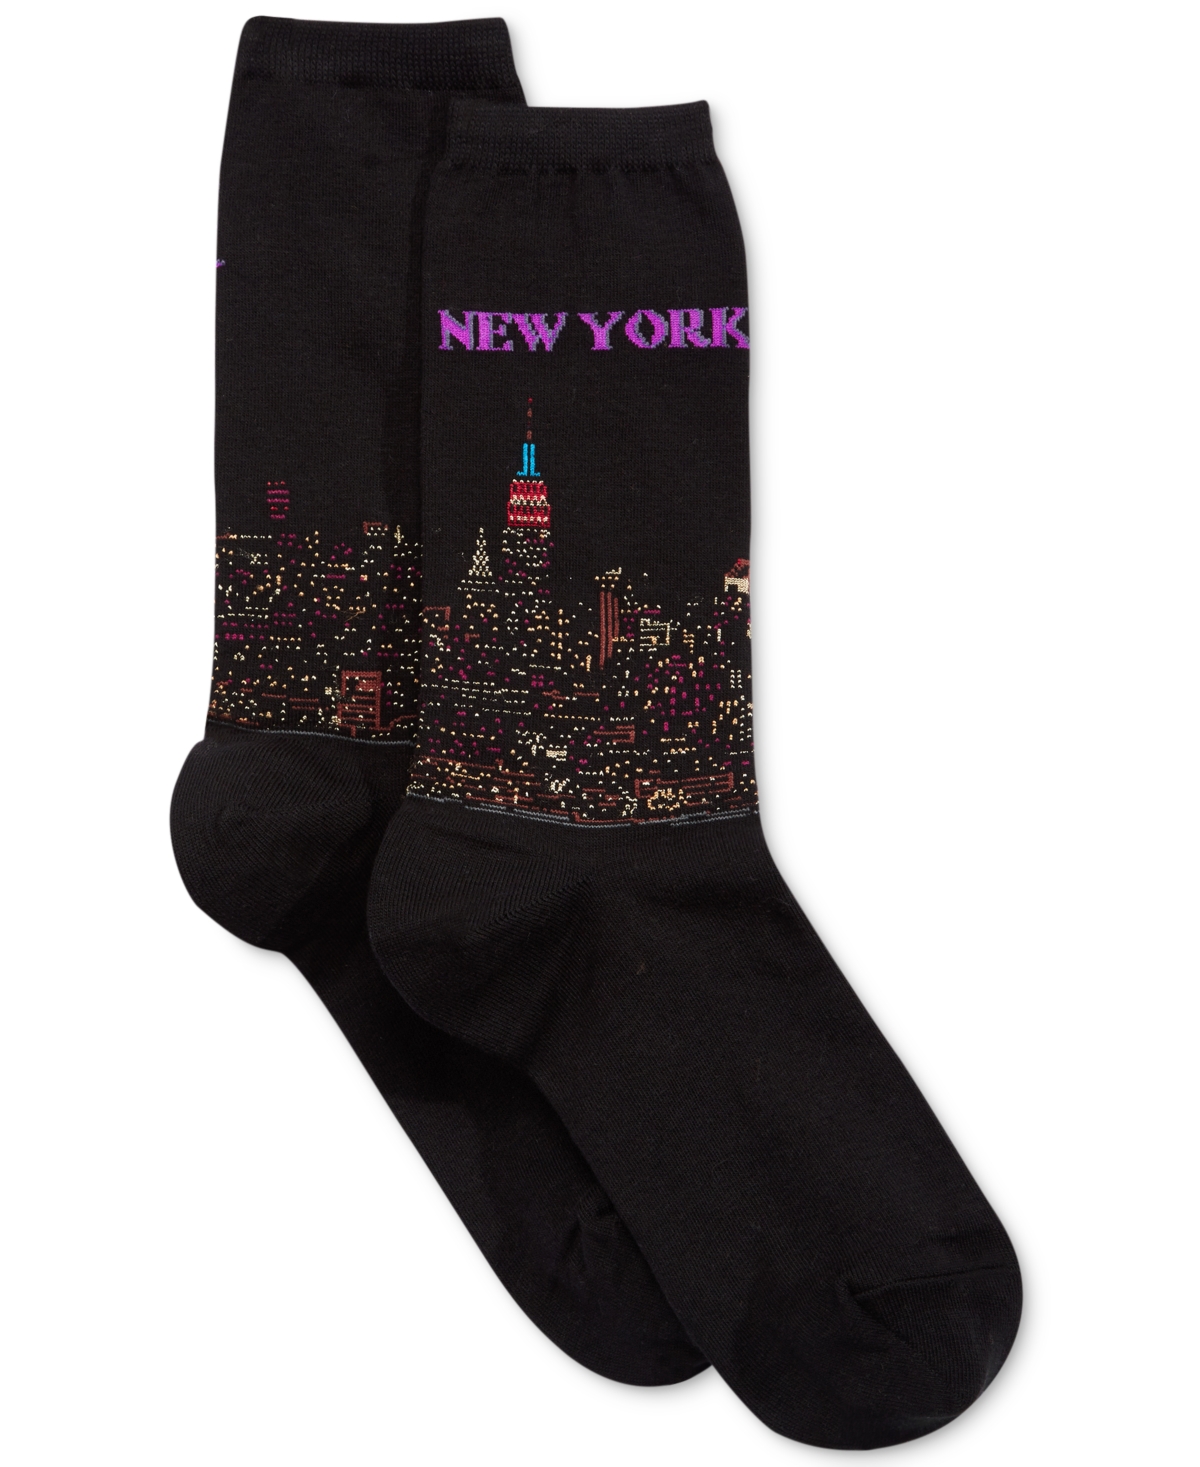 Hot Sox Women's New York Fashion Crew Socks